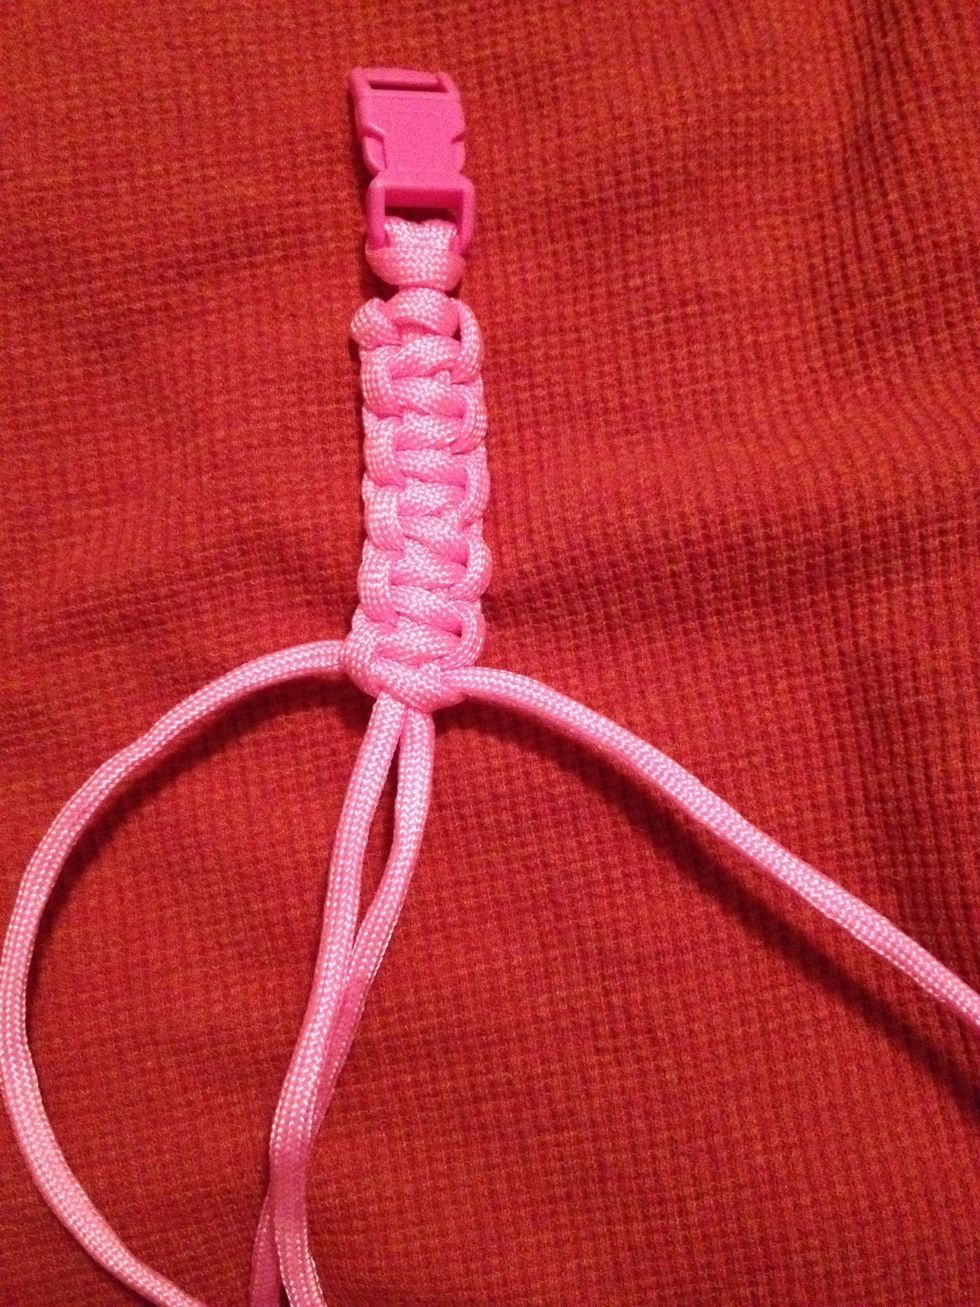 How to make a parachute cord bracelet - B+C Guides